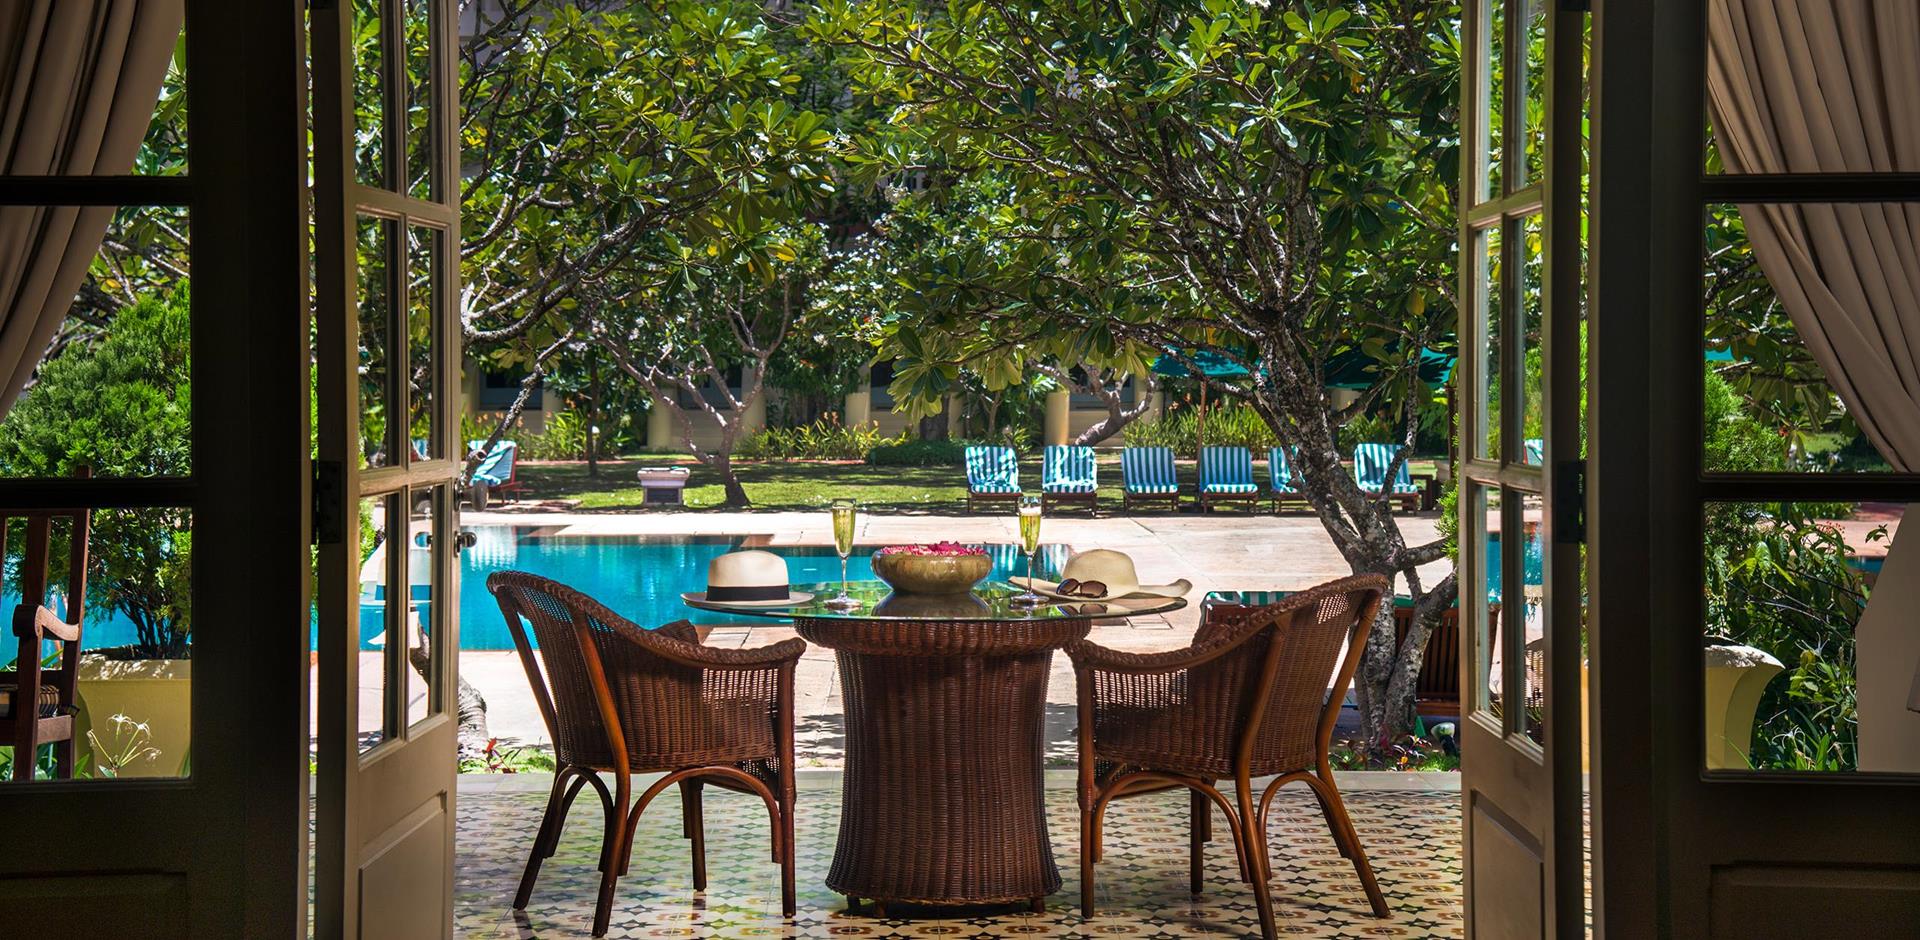 Poolside, Raffles Grand Hotel d'Angkor, Cambodia, A&K